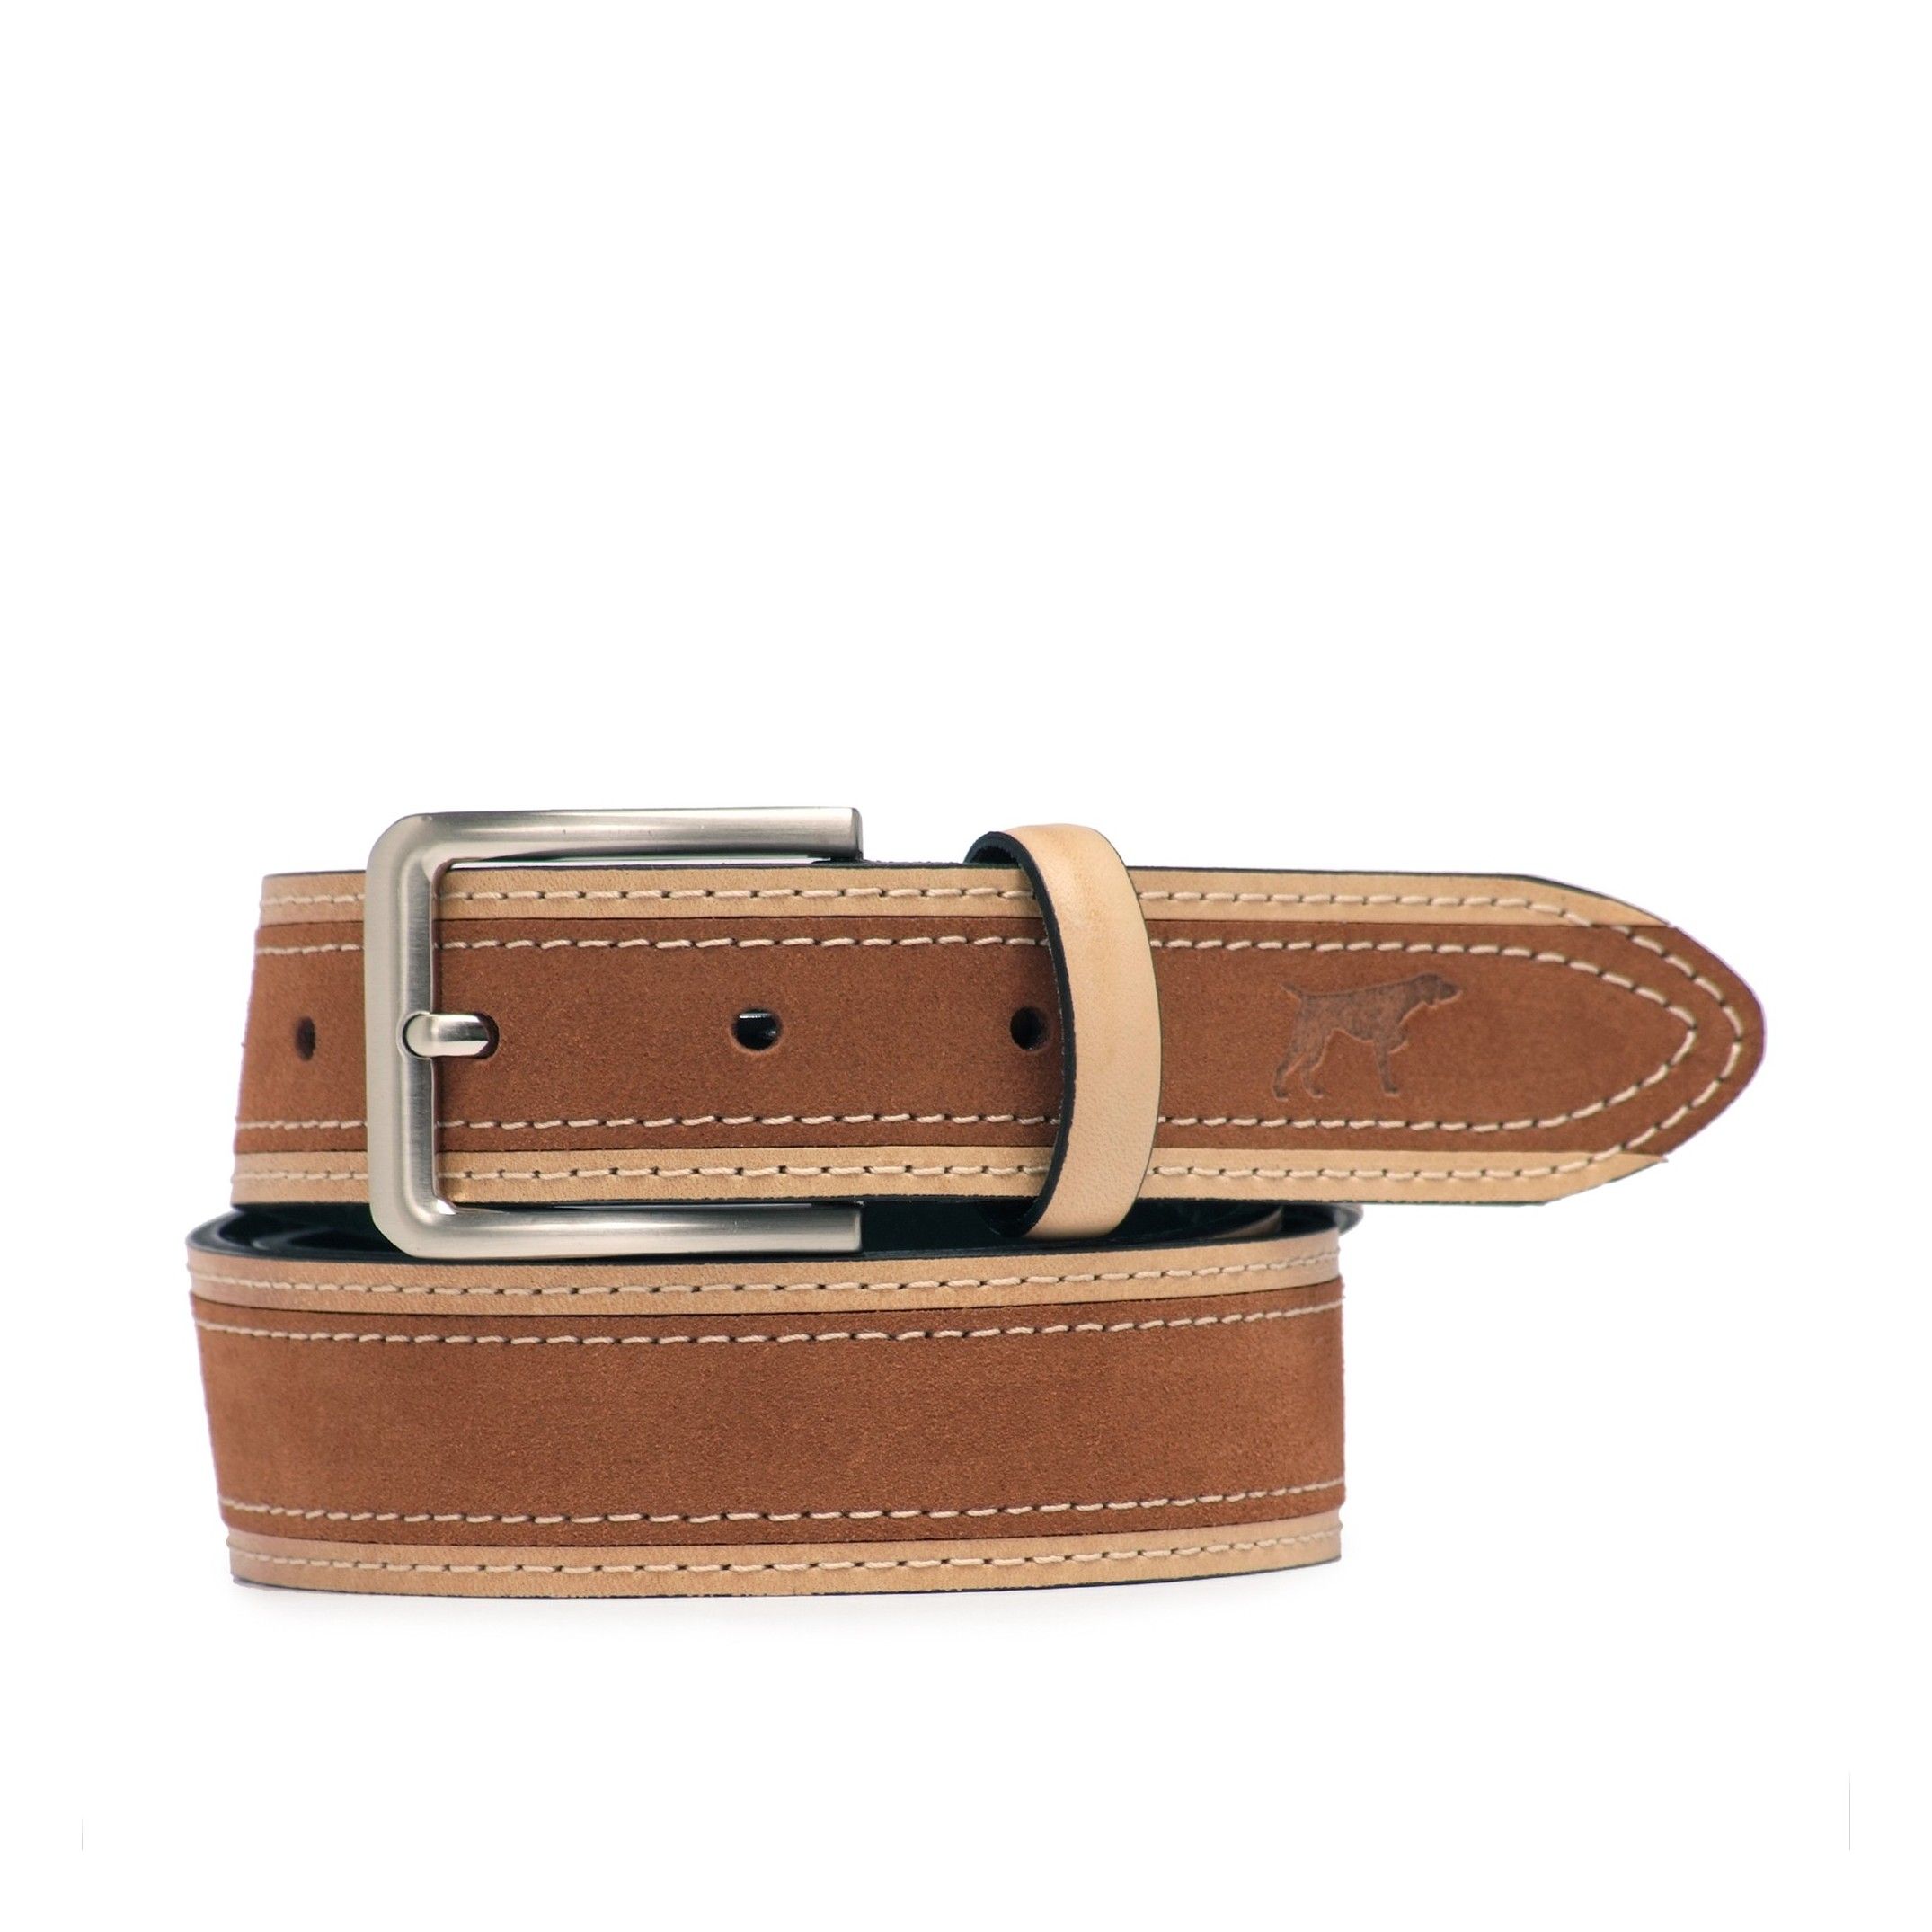 Castellanisimos Leather and Adjustable Belt for Men